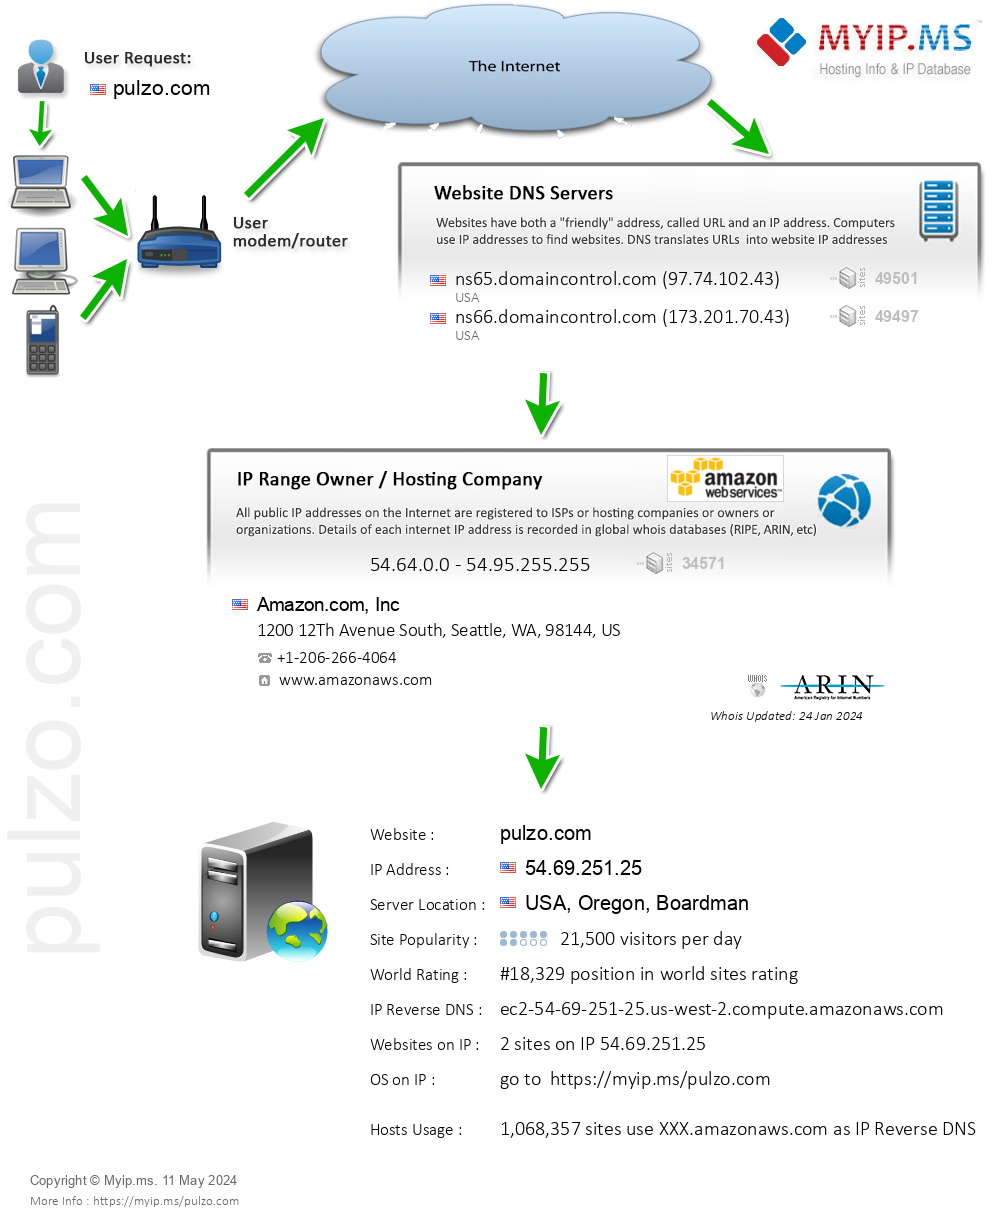 Pulzo.com - Website Hosting Visual IP Diagram